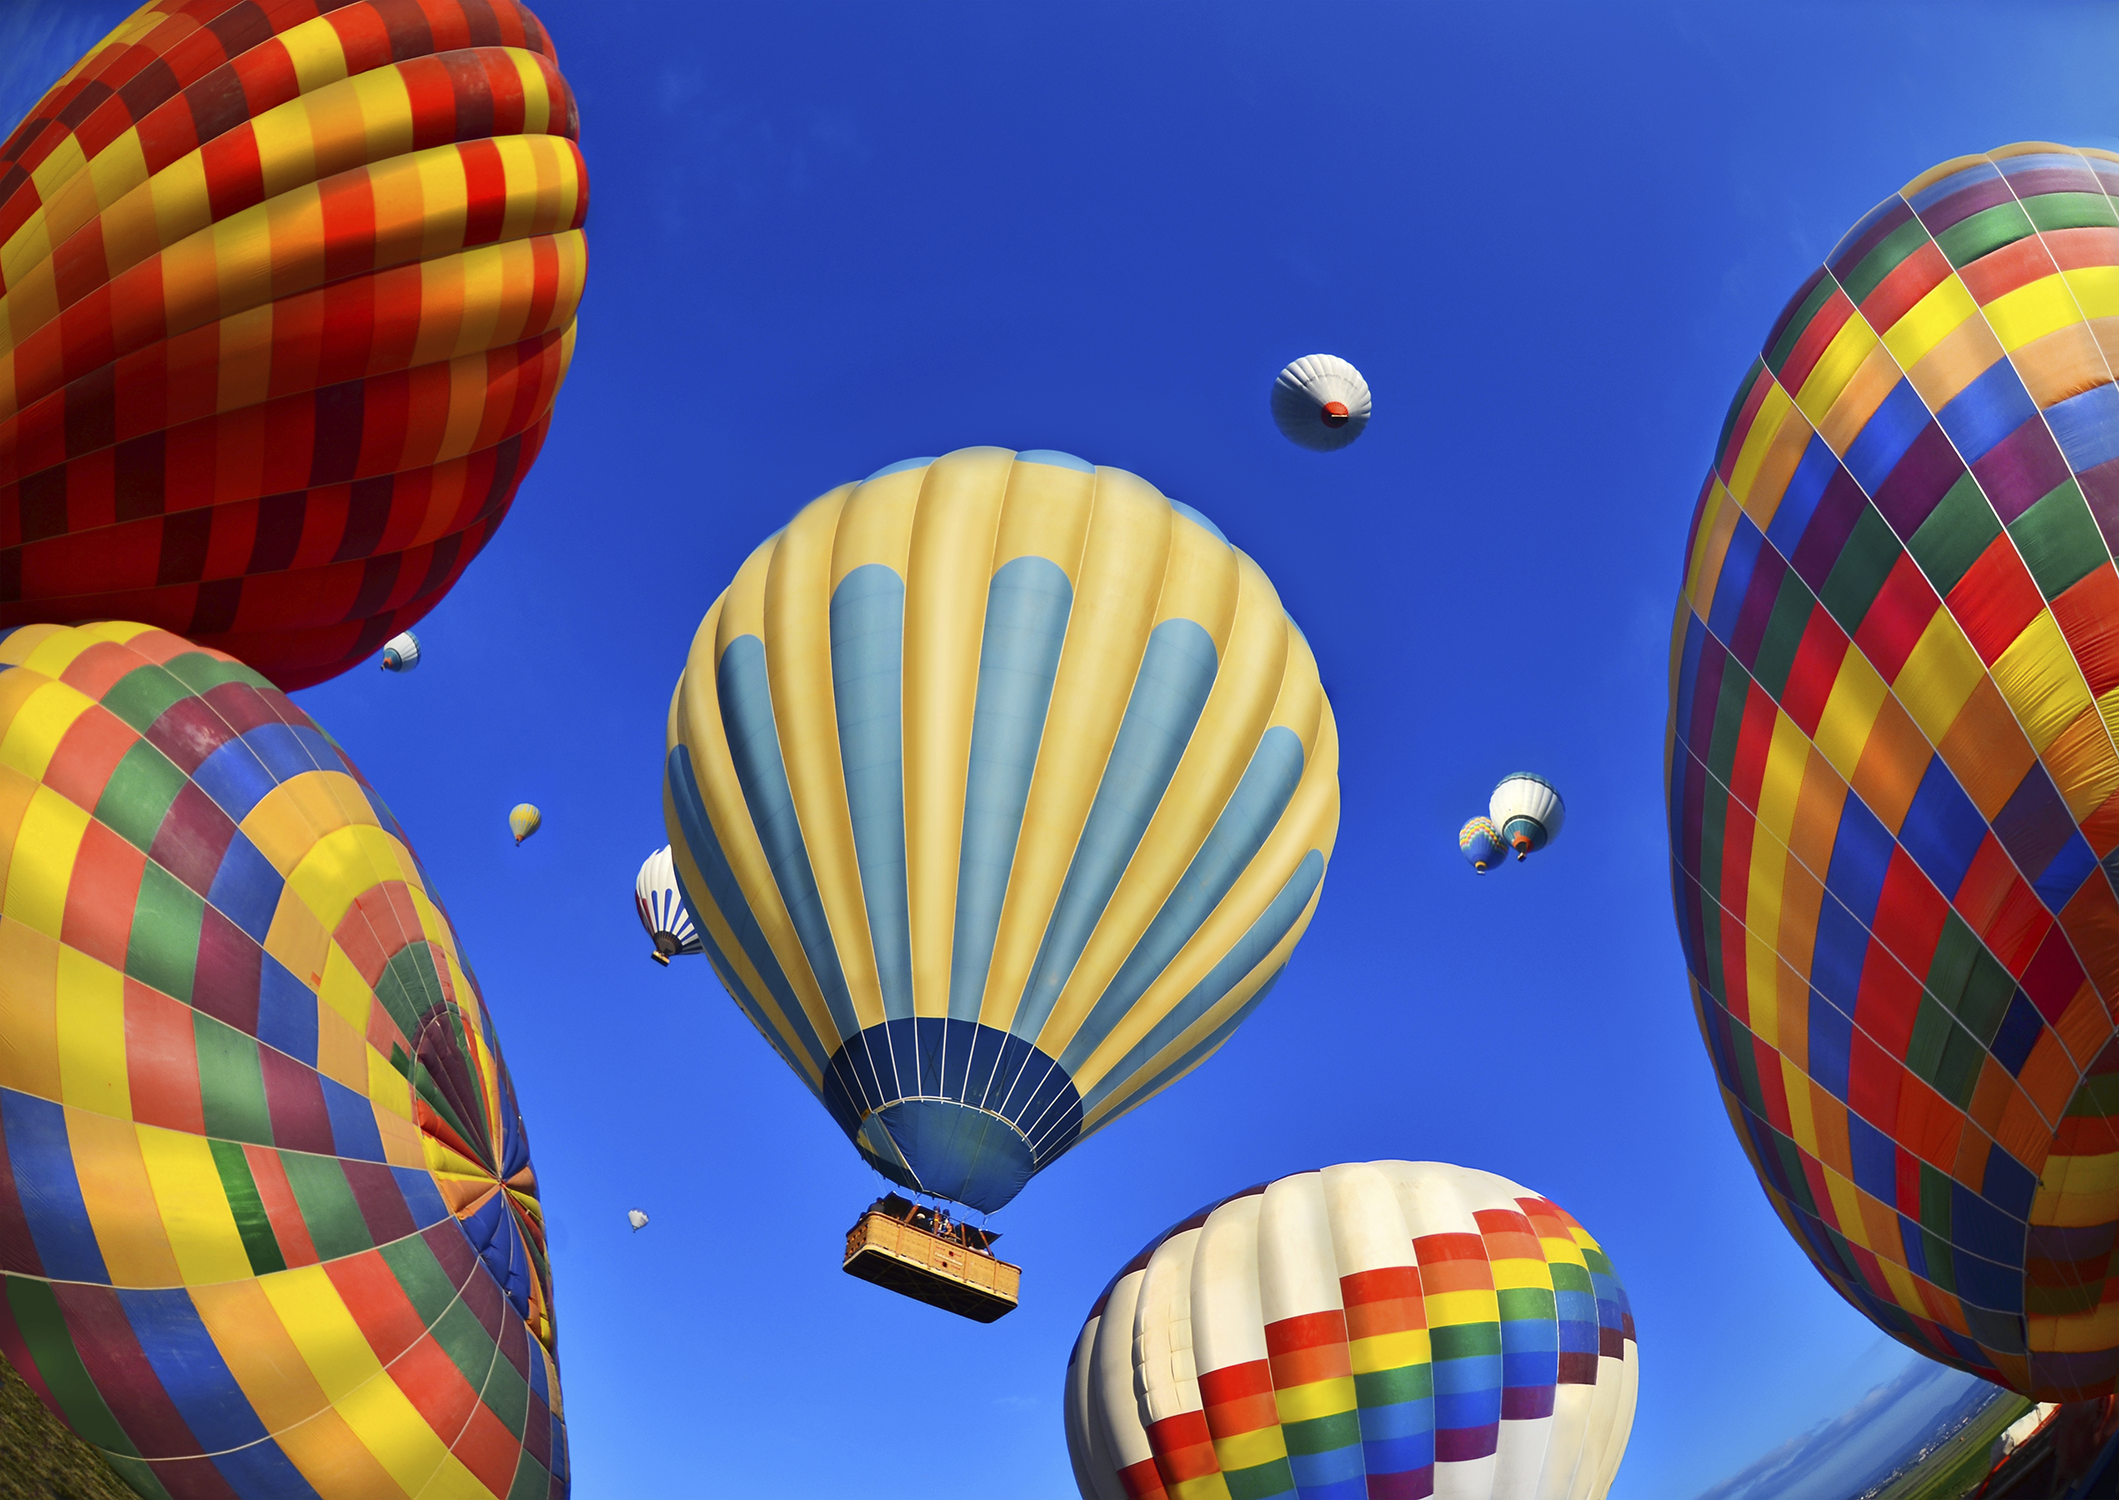 stock photo of hot air balloons